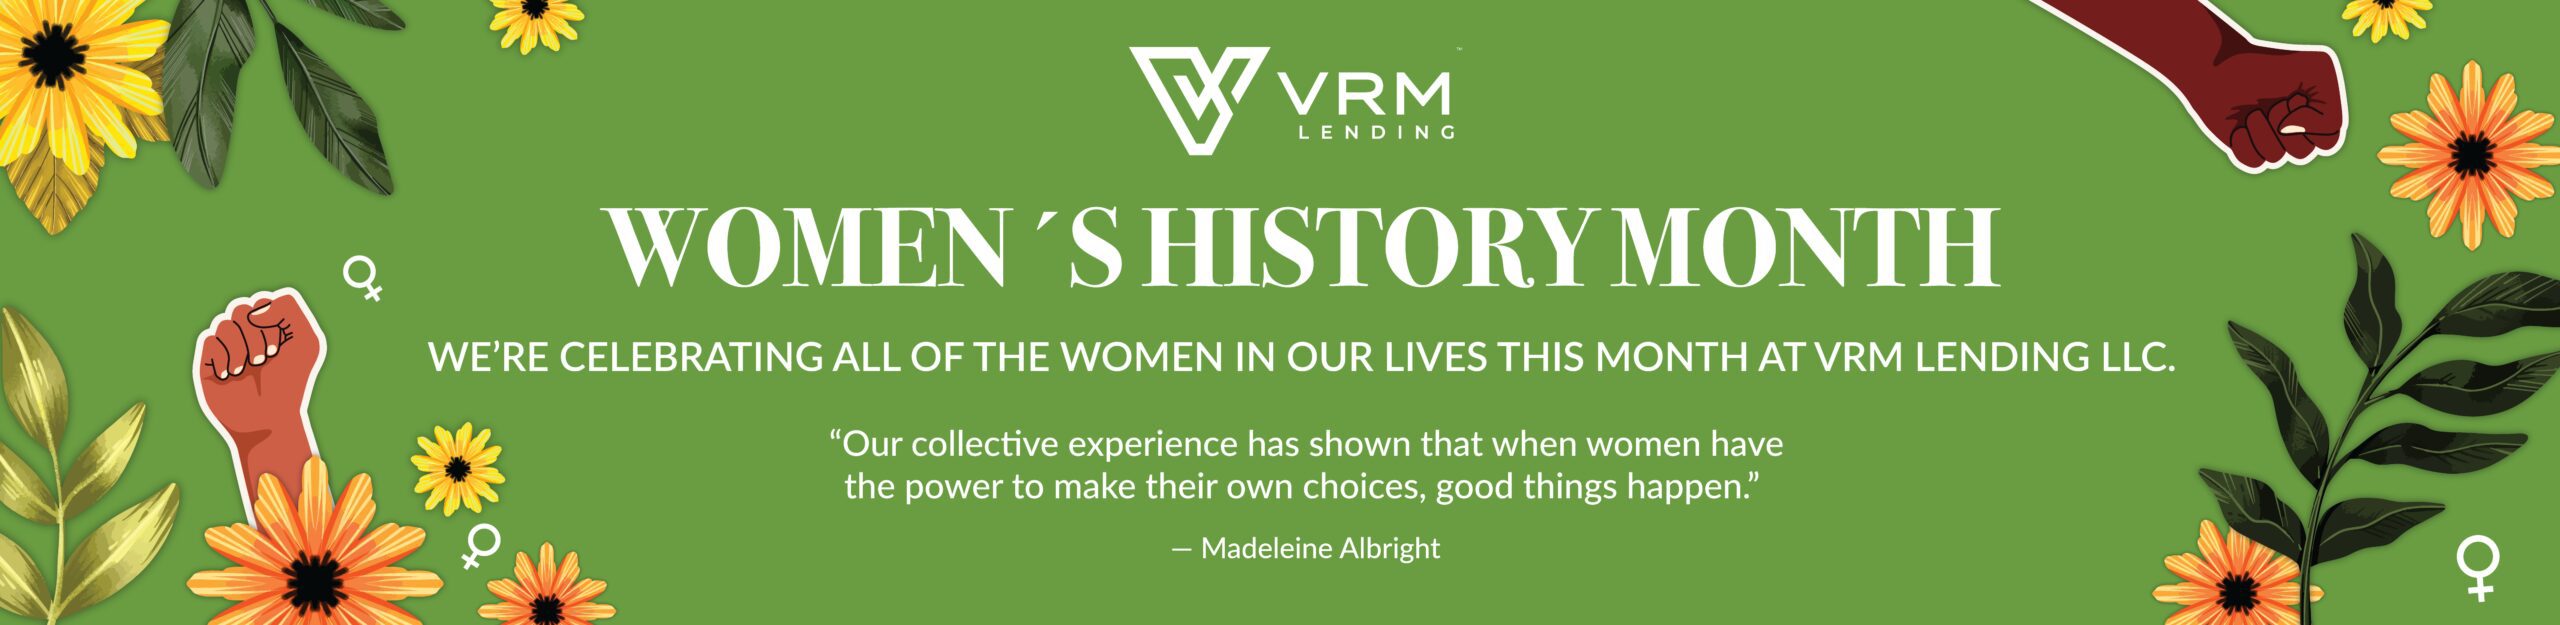 VRML Women's History Month Banner | VRM Lending LLC | Home Financing Made Easy